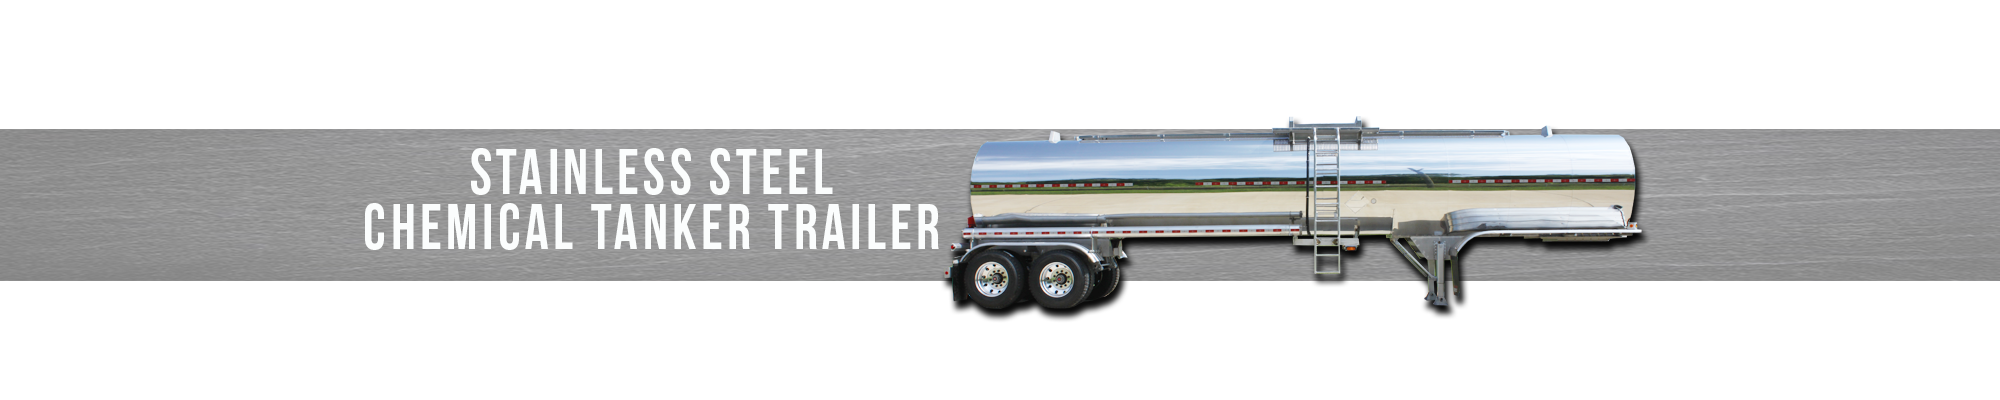 Stainless Steel Chemical Tanker Trailer